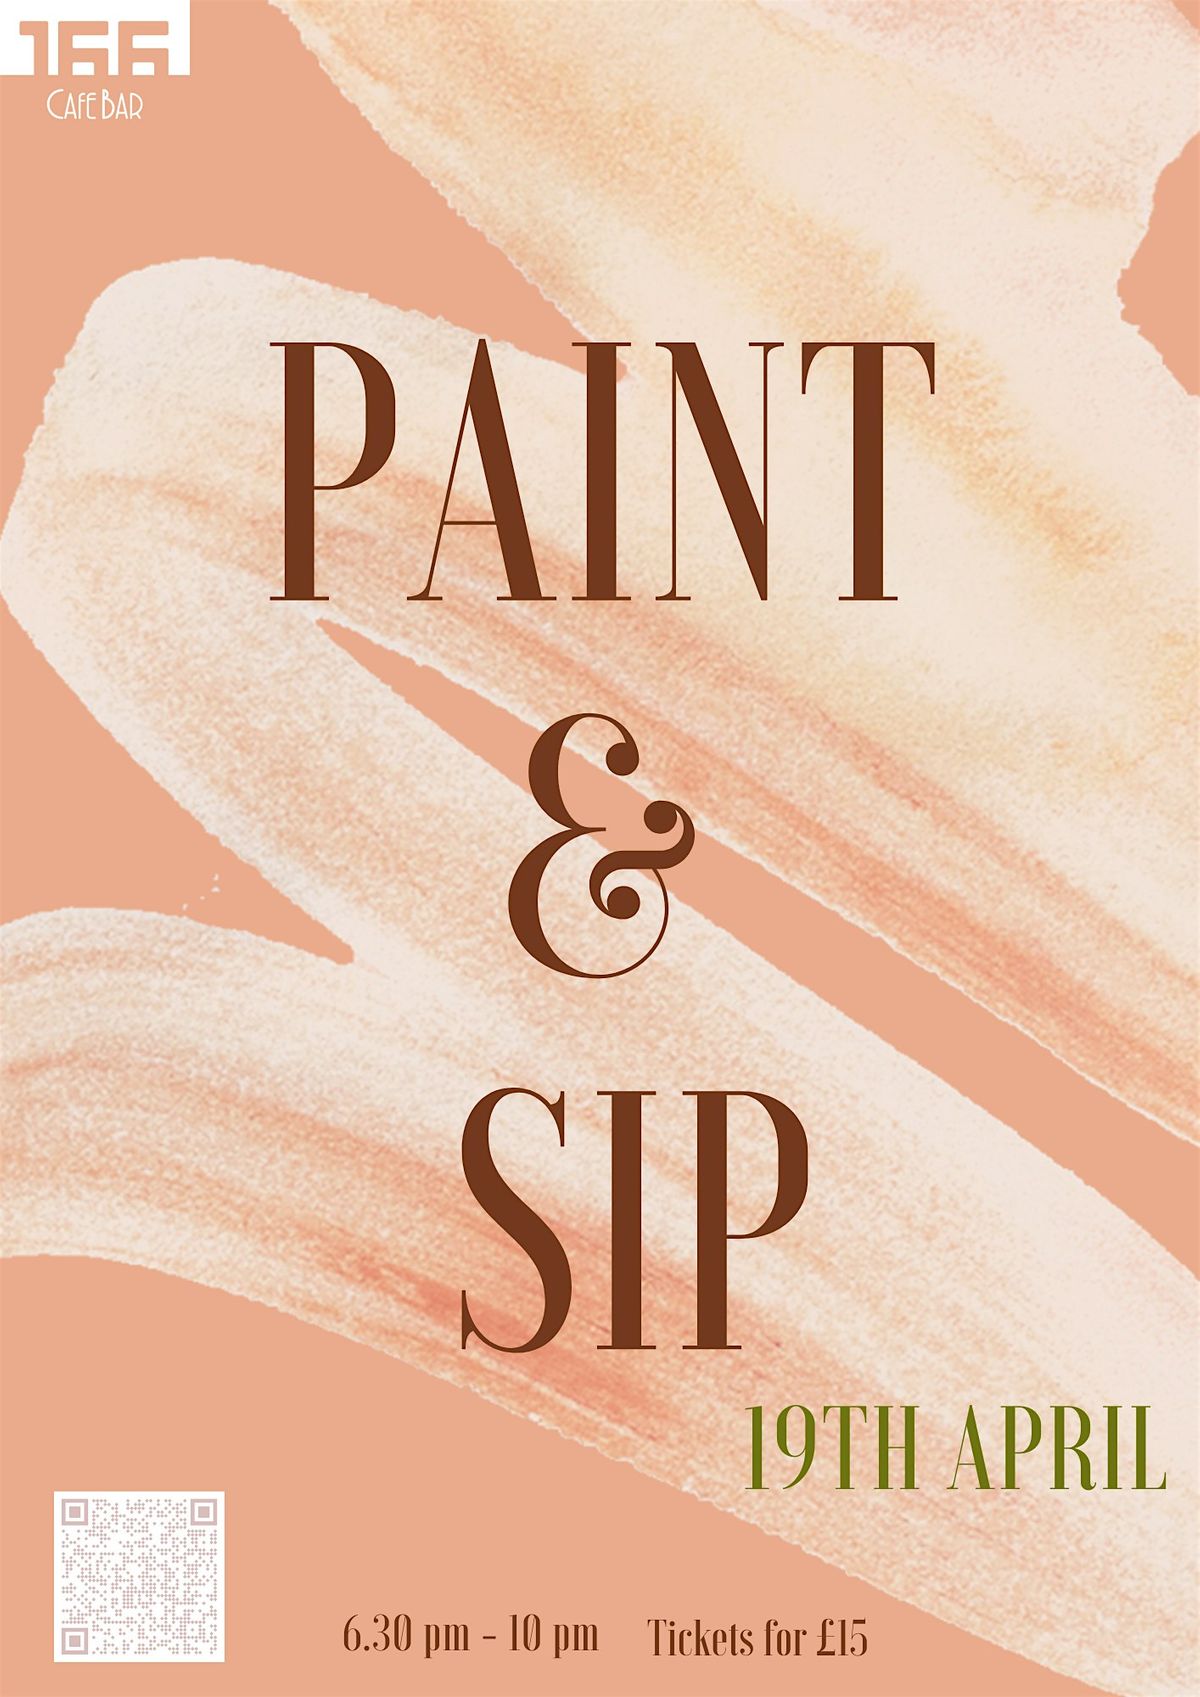 Paint & Sip at CafeBar 166 - April 19th